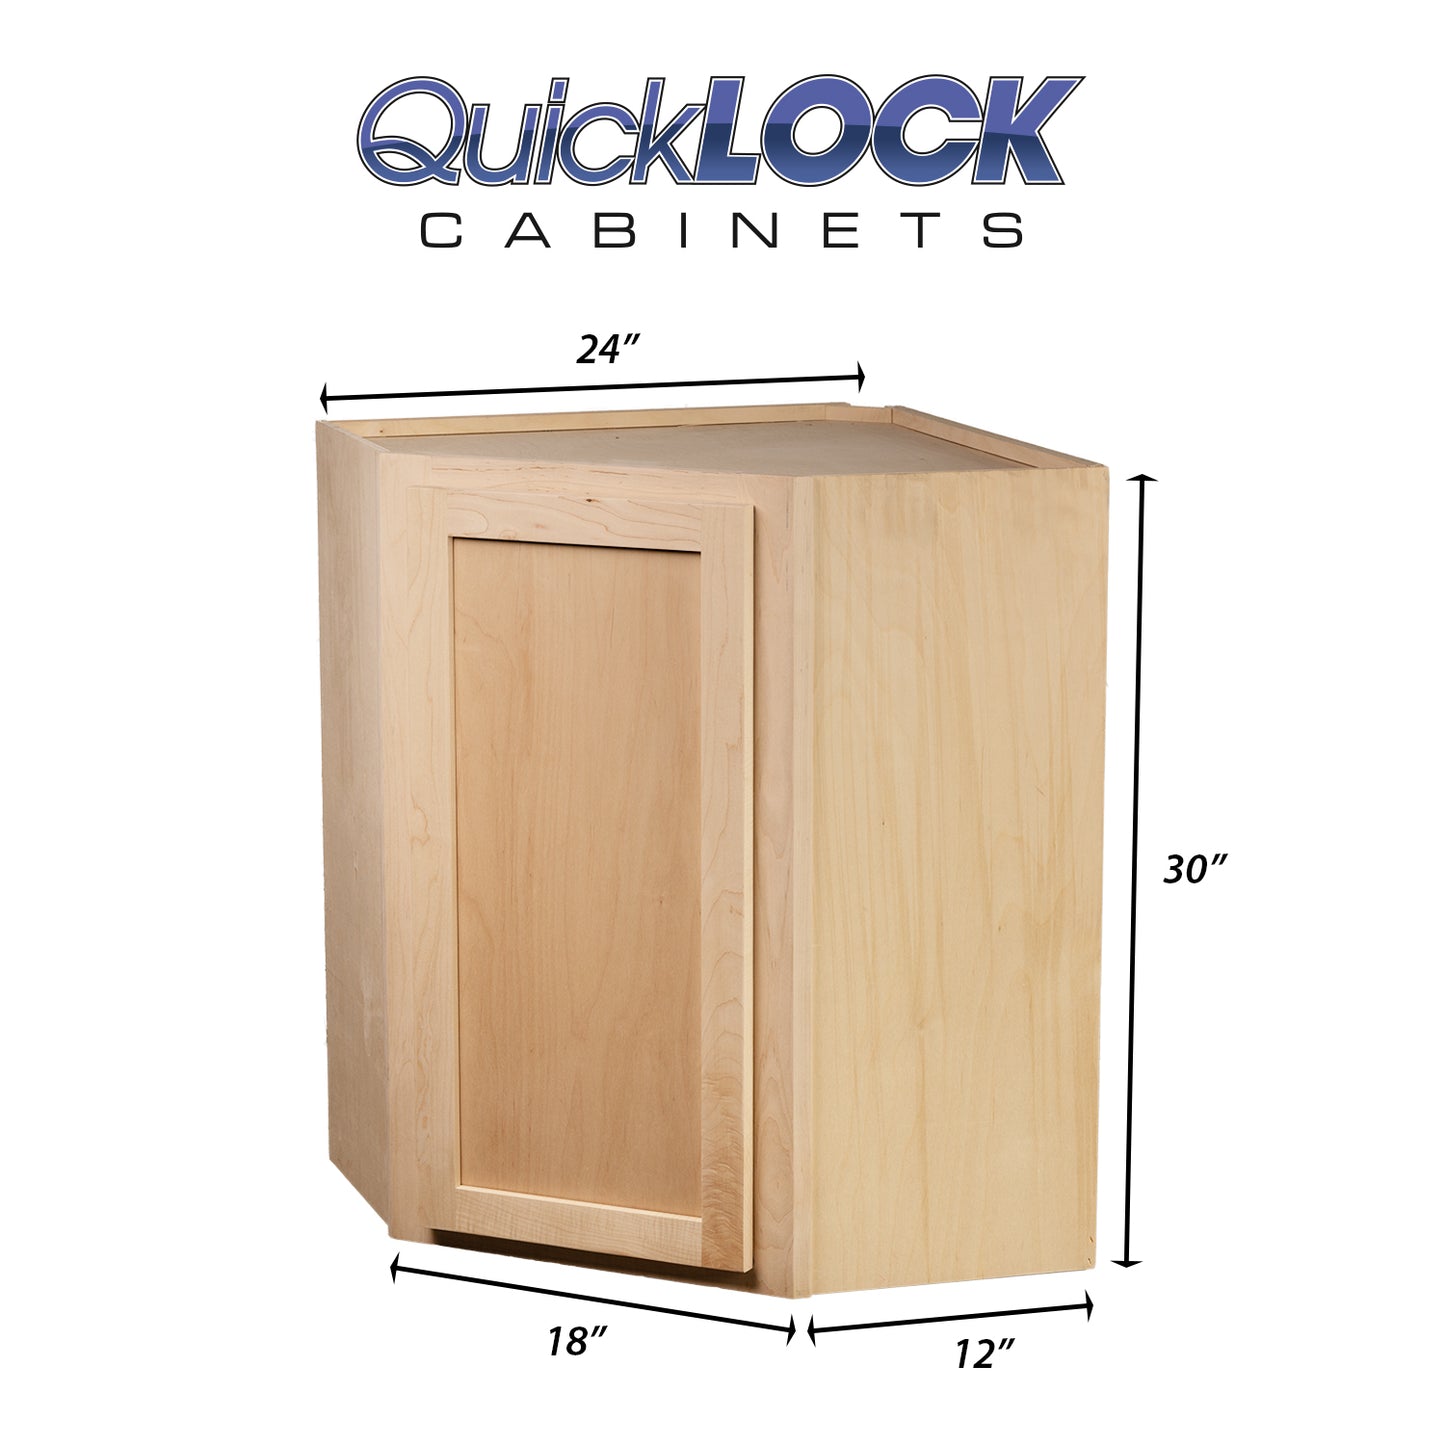 Quicklock RTA (Ready-to-Assemble) Raw Maple 24"Wx30"Hx12"D Wall Corner Cabinet